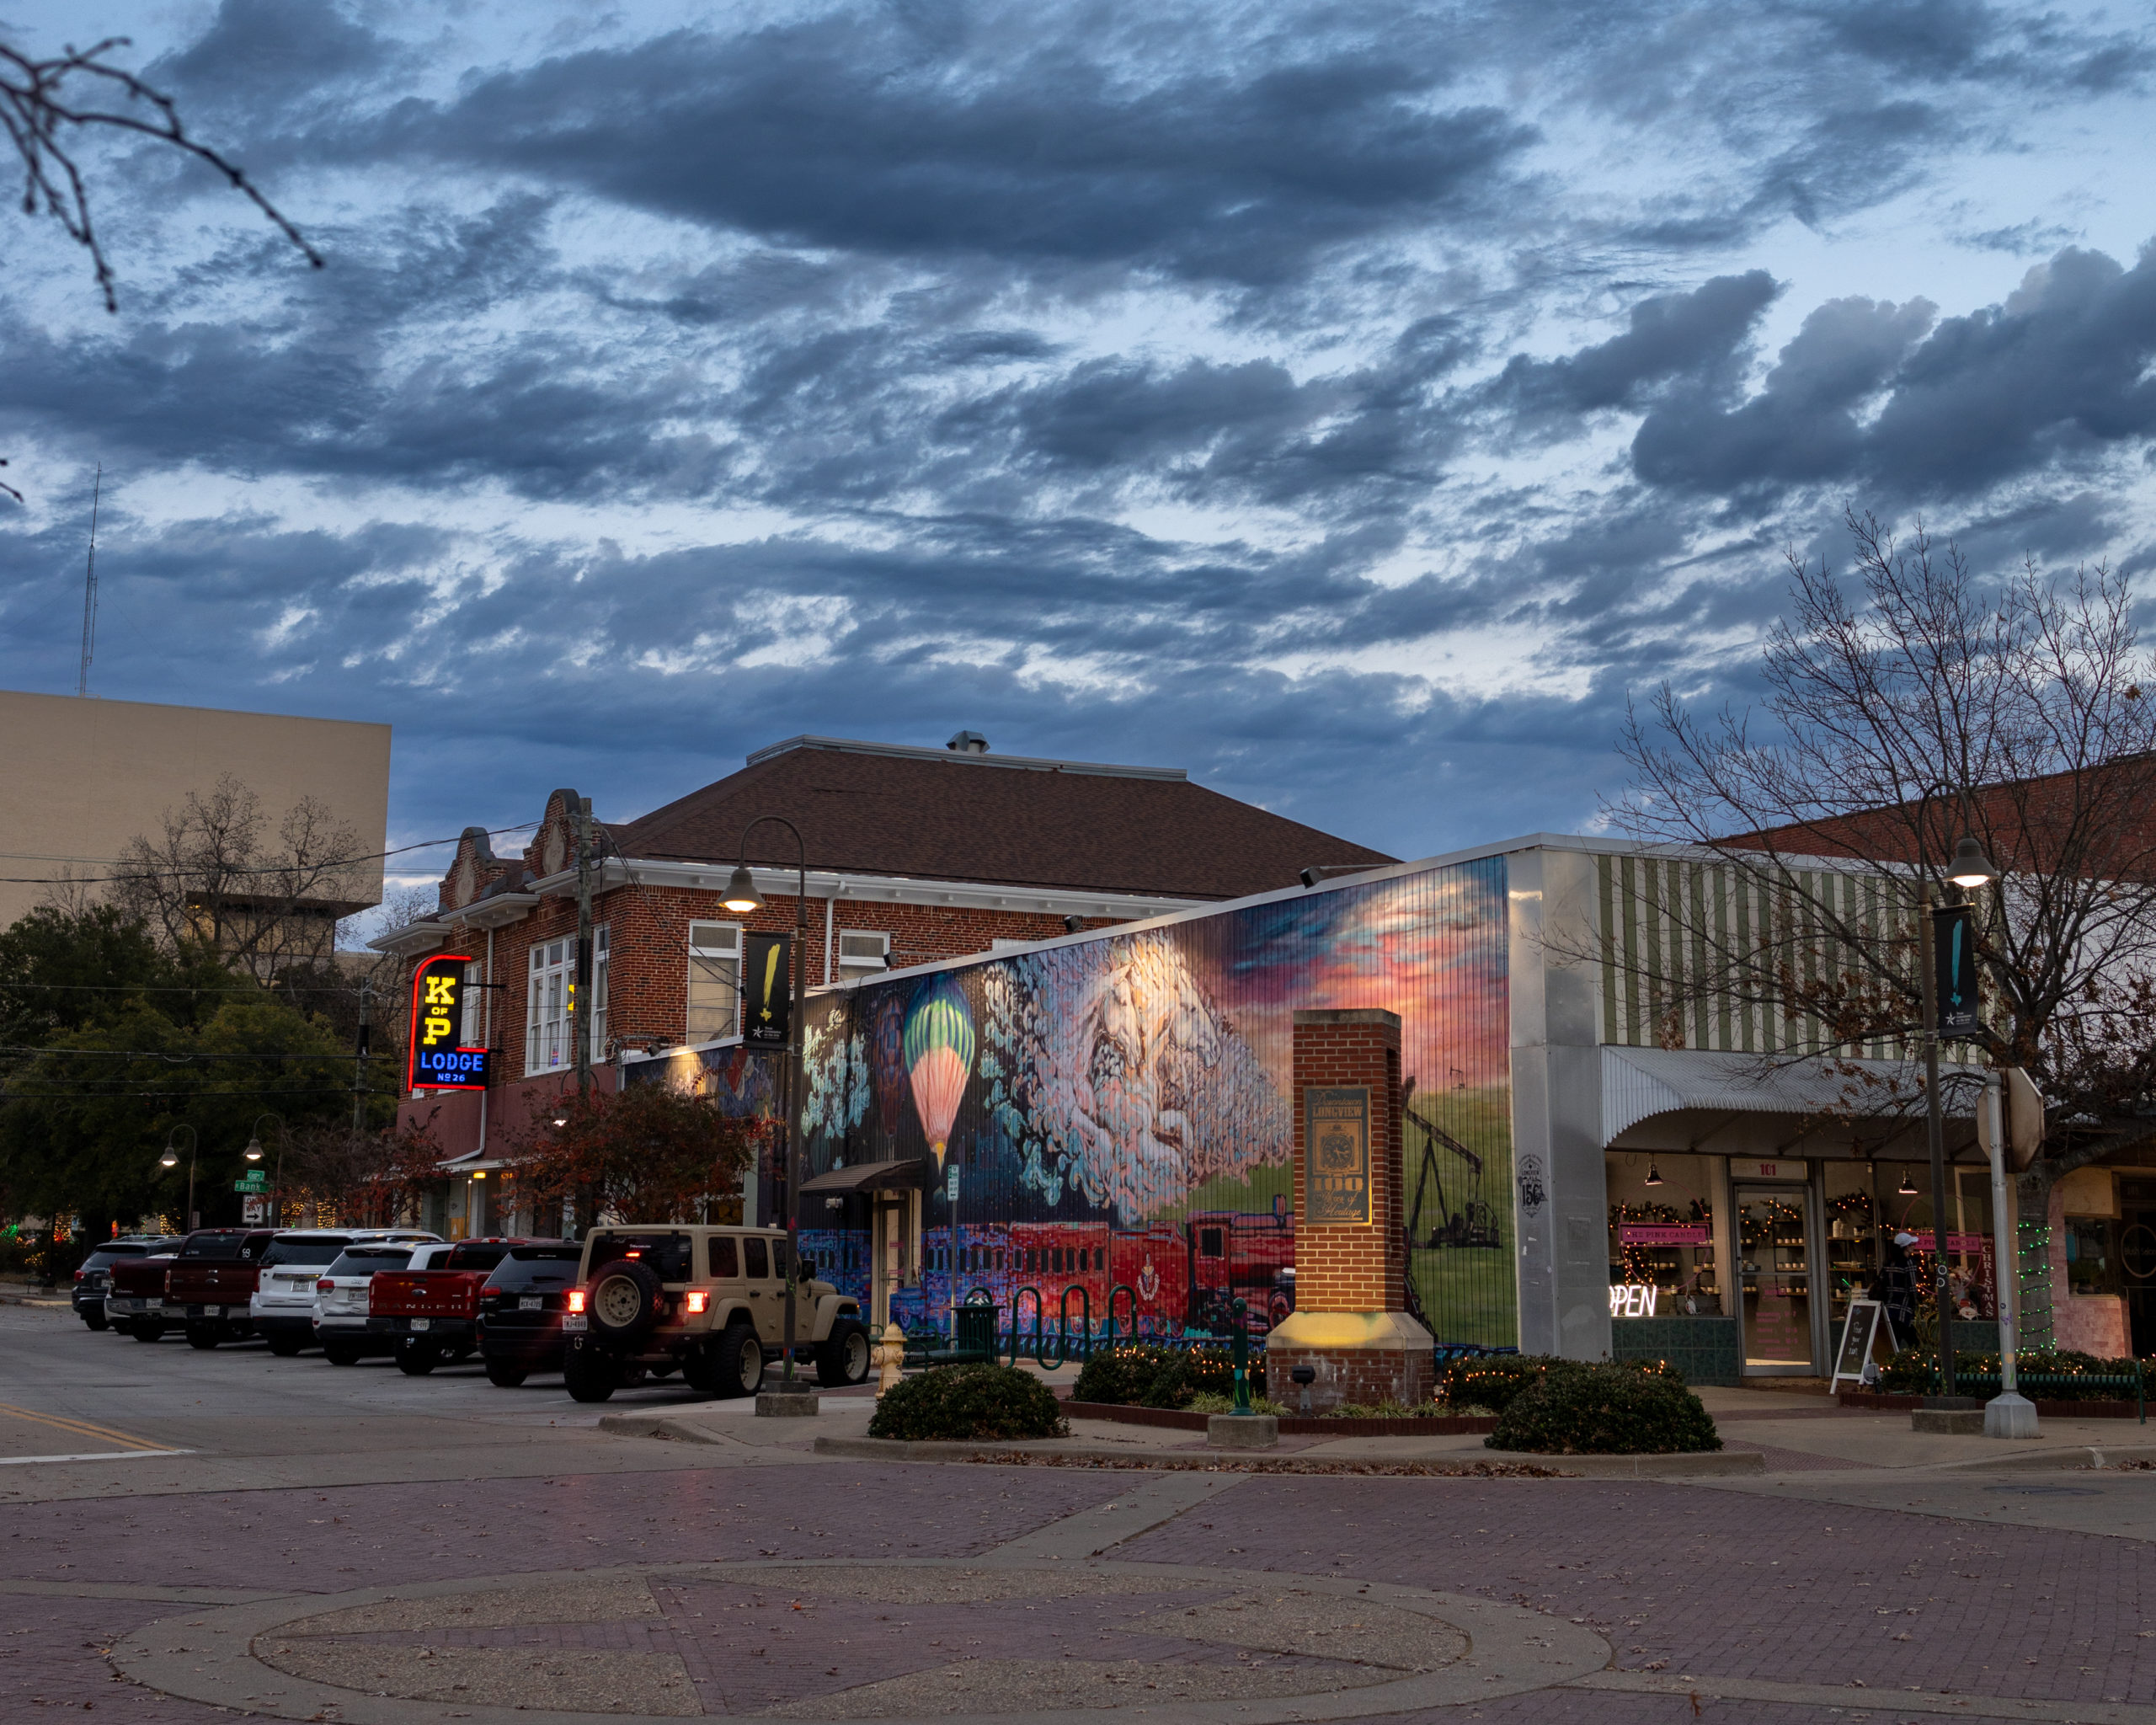 Mural, Sunset, Clouds, Downtown Longview Texas